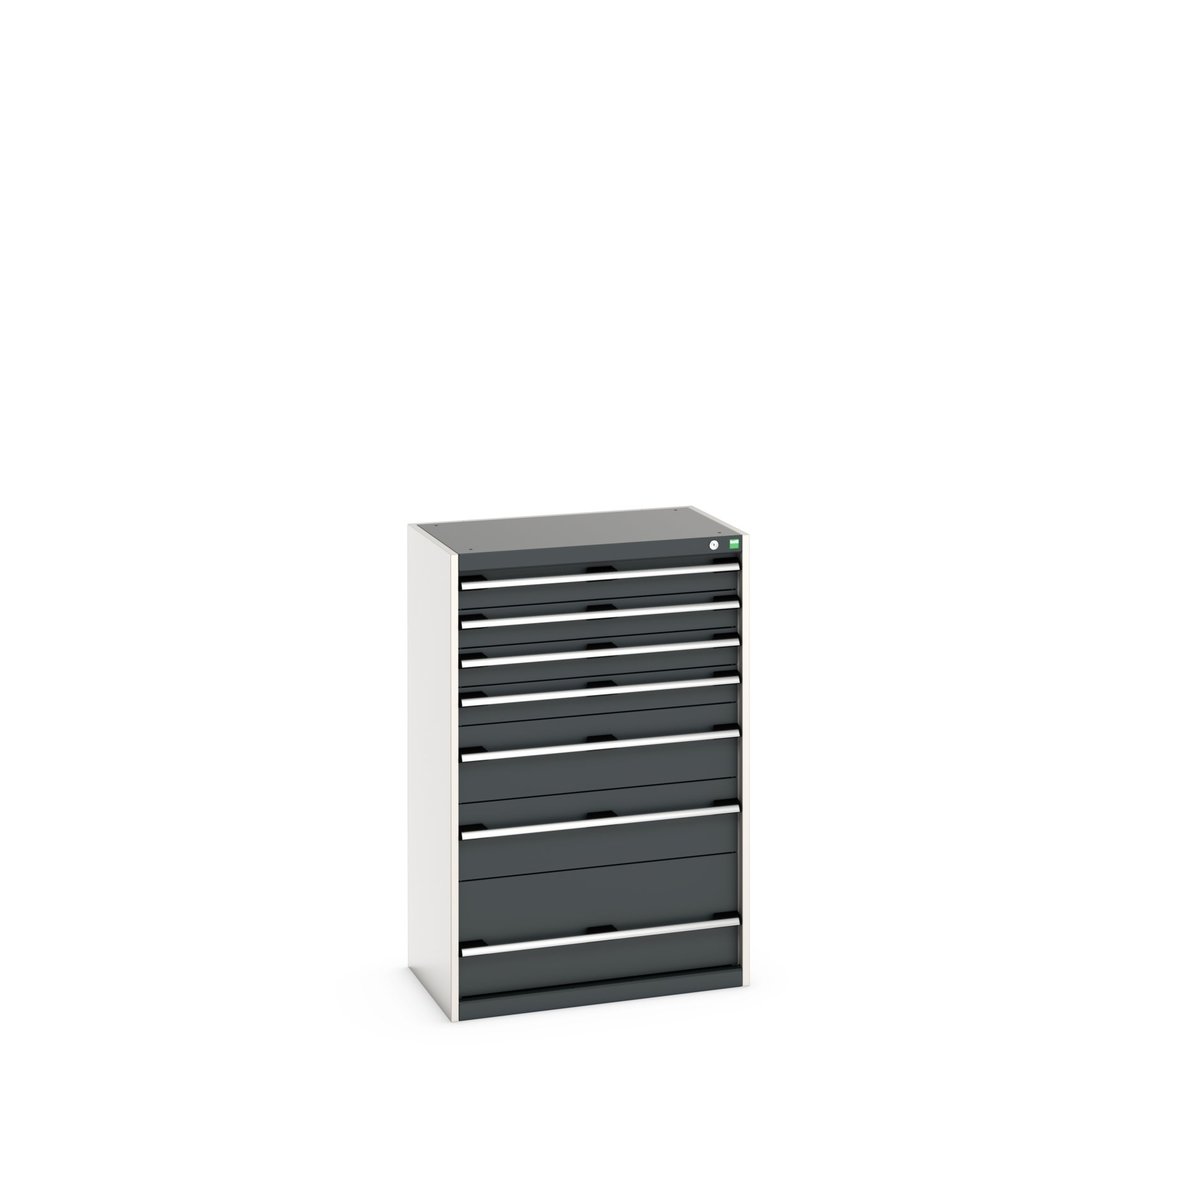 40012104. - cubio drawer cabinet